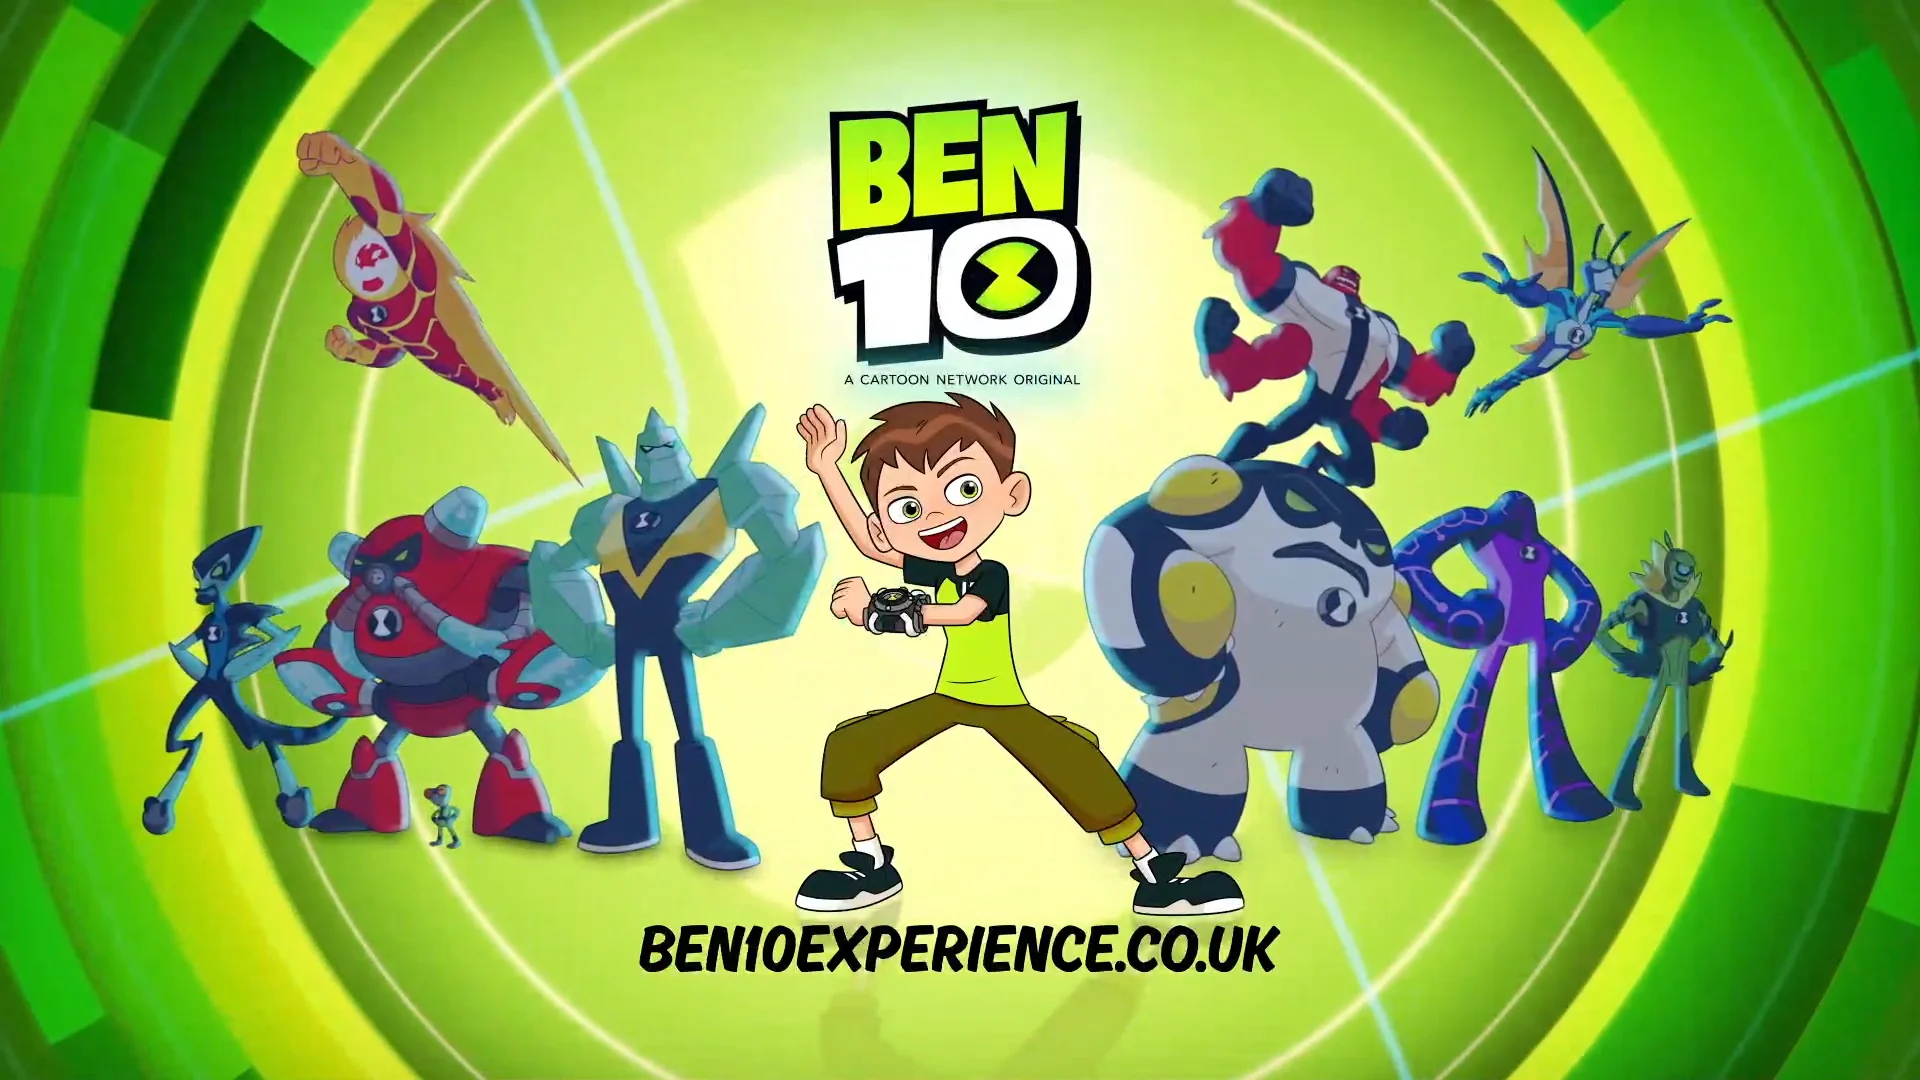 Cartoon Network: Ben 10 AR Body Tracking Experience on Vimeo